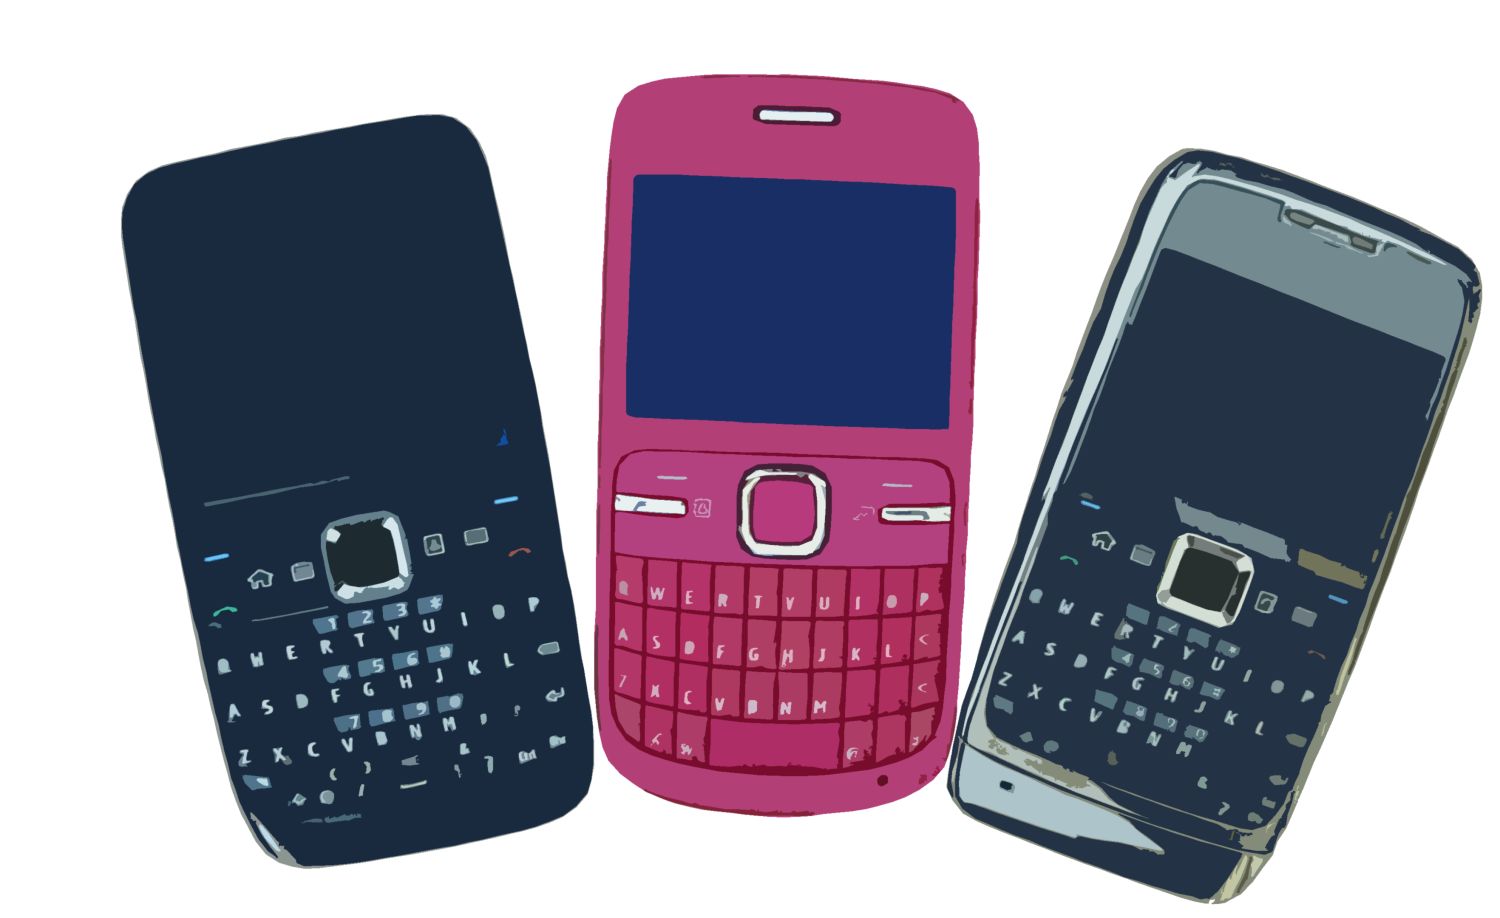 tastatur hintergrundbild,mobiltelefon,gadget,kommunikationsgerät,funktionstelefon,tragbares kommunikationsgerät